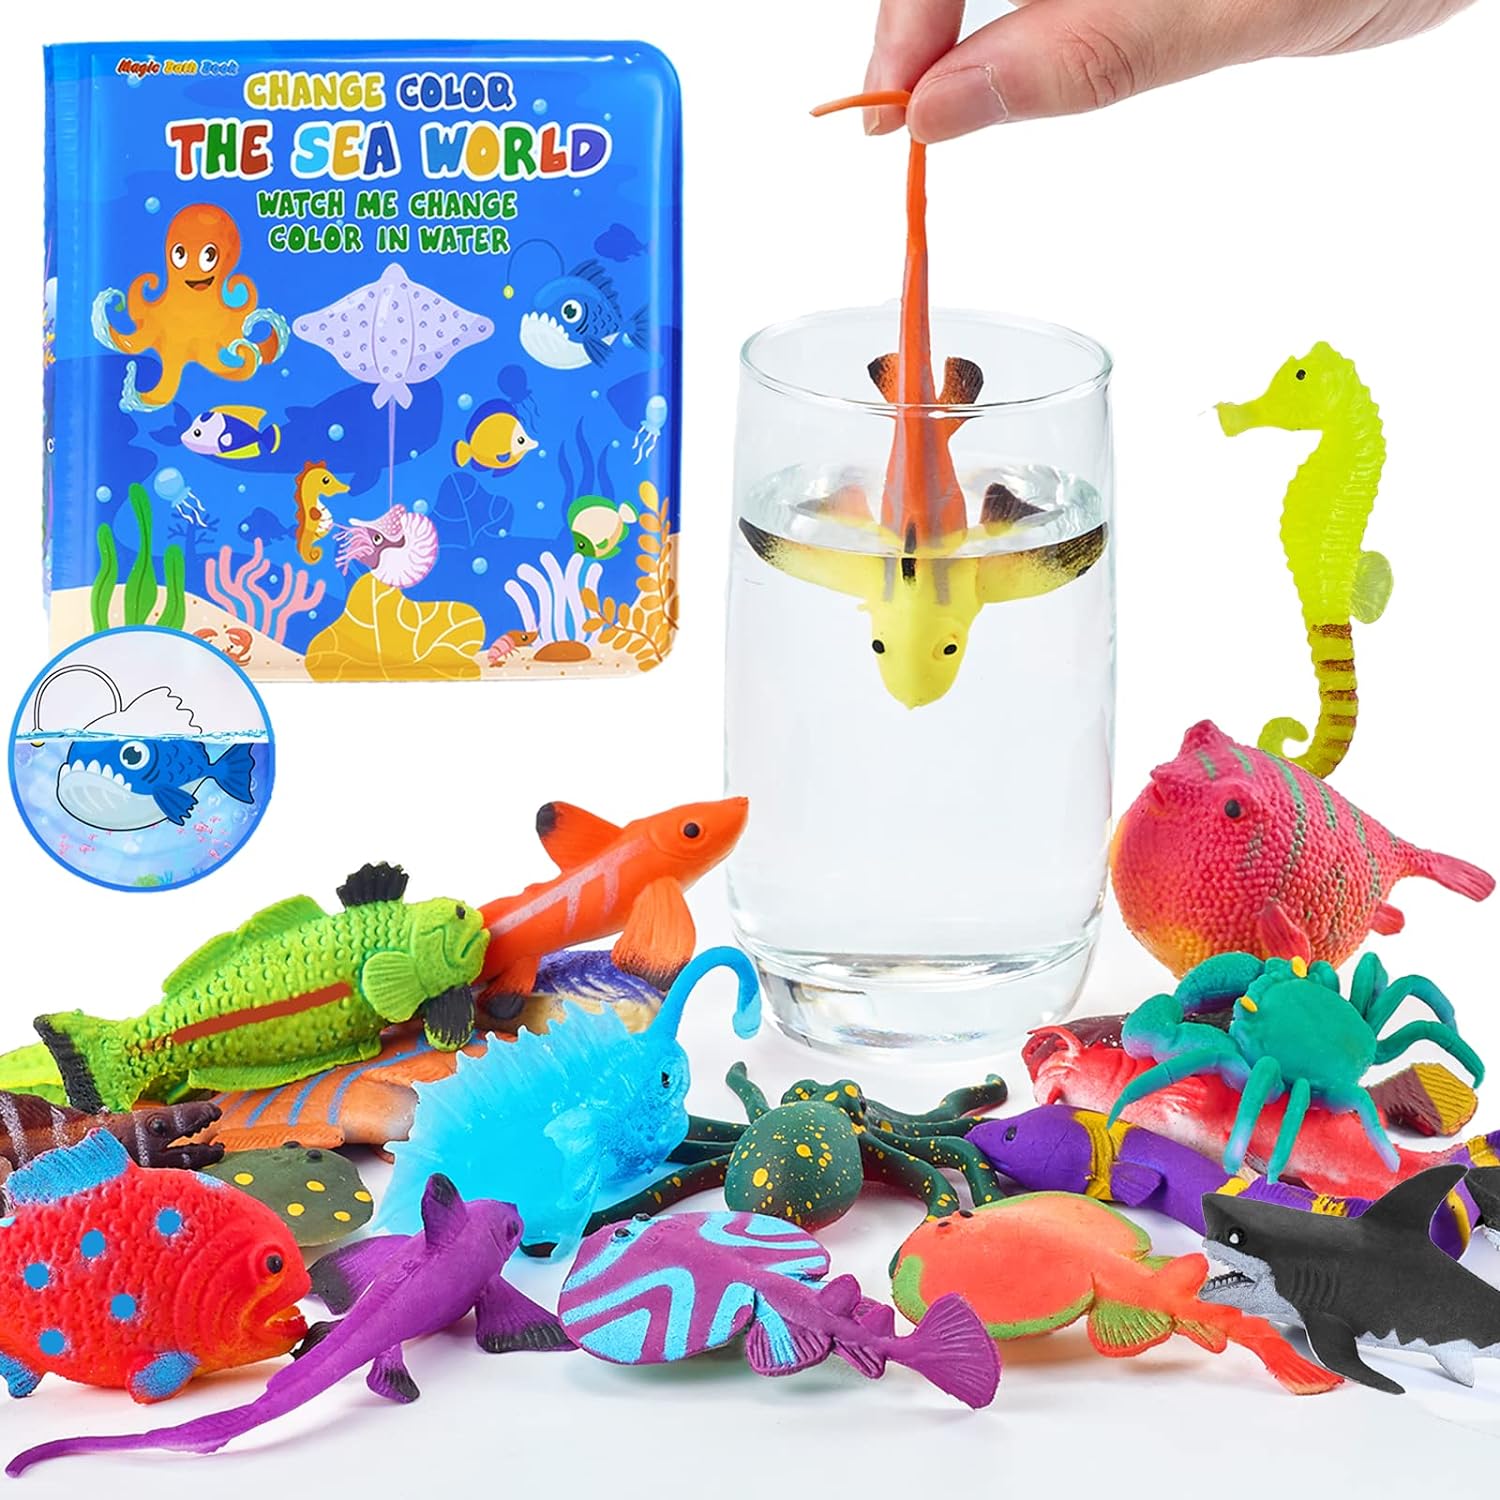 Bath Toys, 8 Pcs Light Up Floating Rubber Animal Toys Set, Flashing Color Changing Light